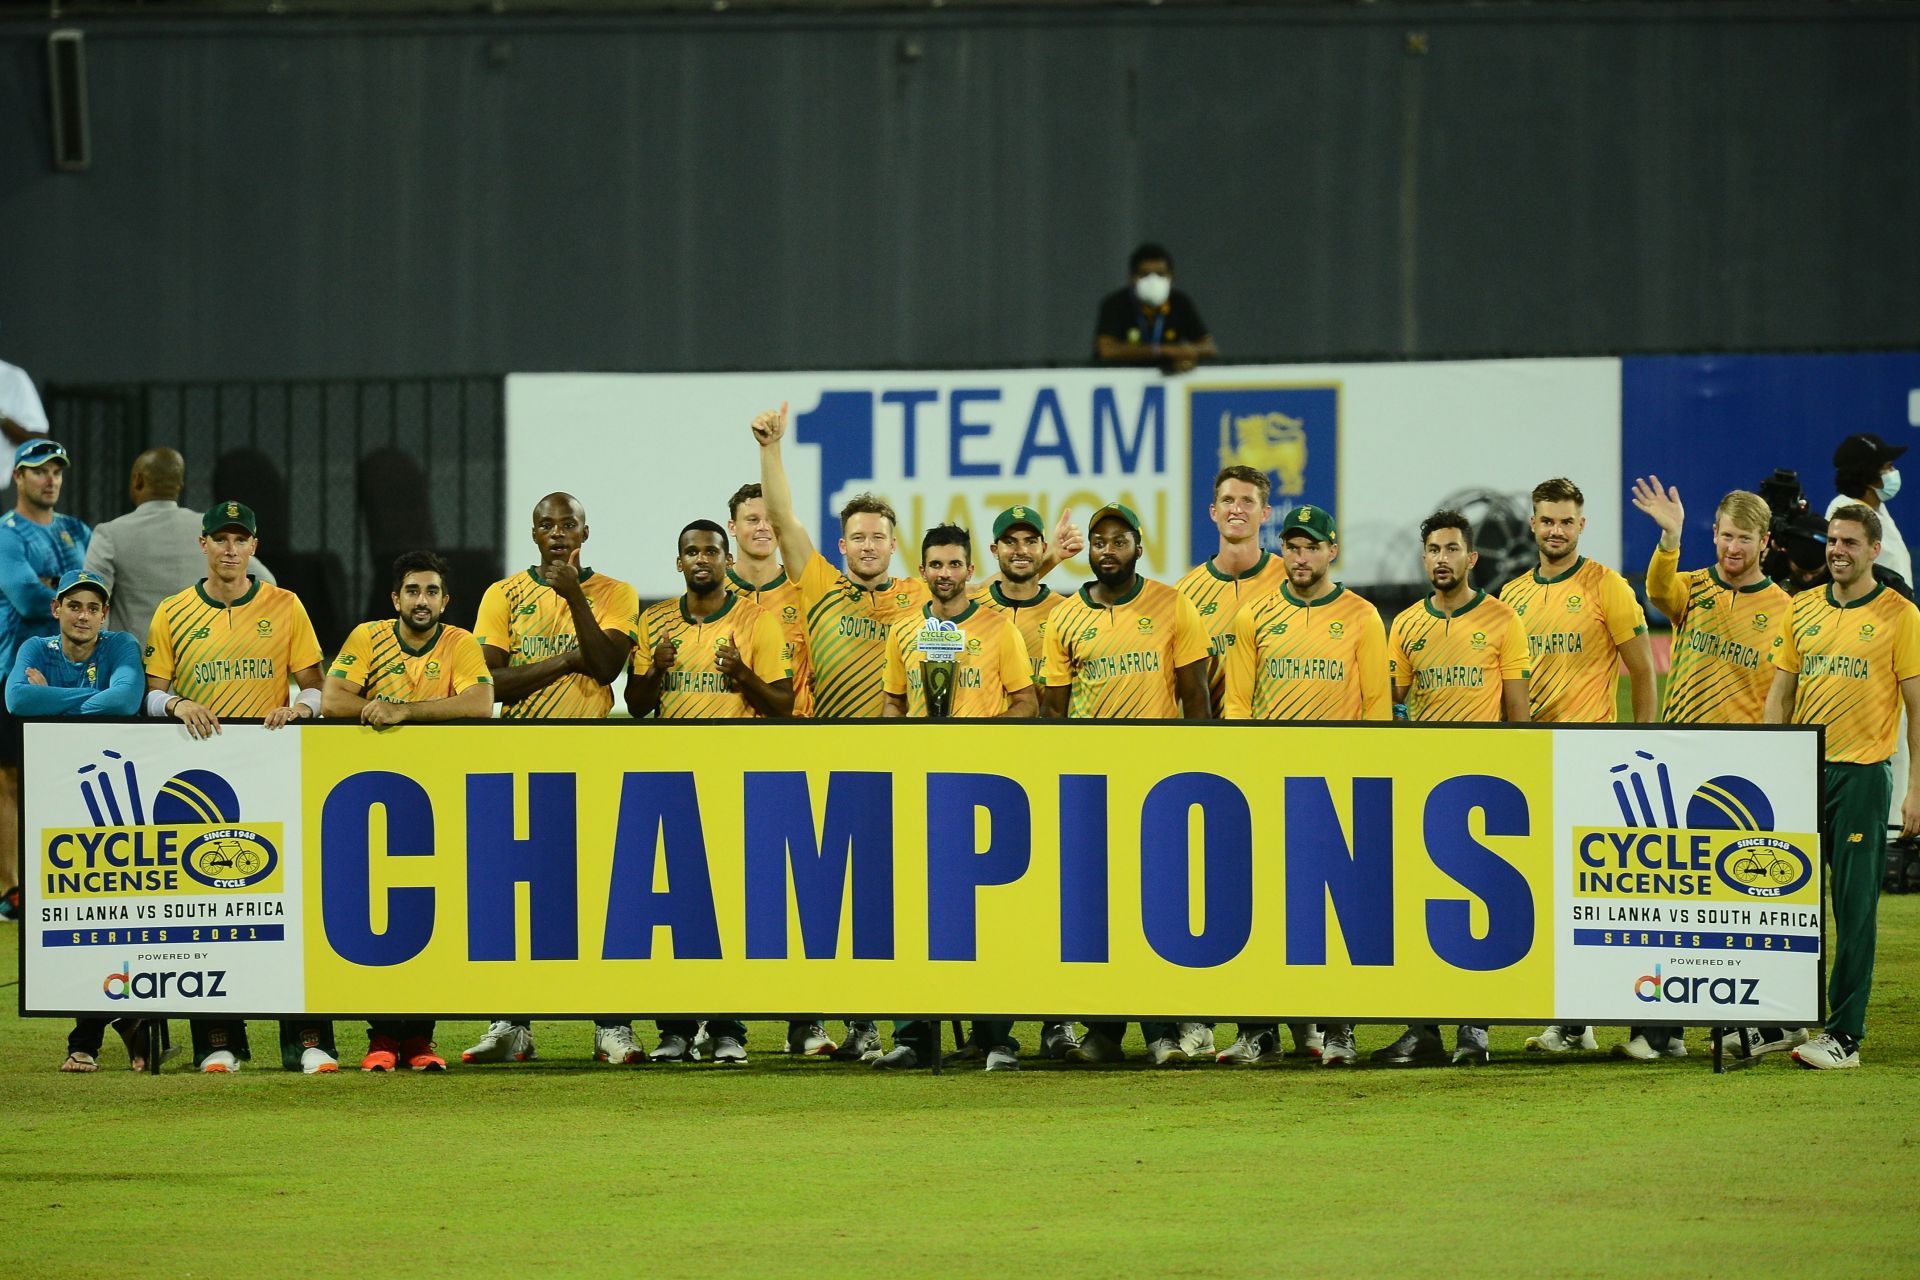 The Proteas won the previous South Africa vs Sri Lanka T20I series